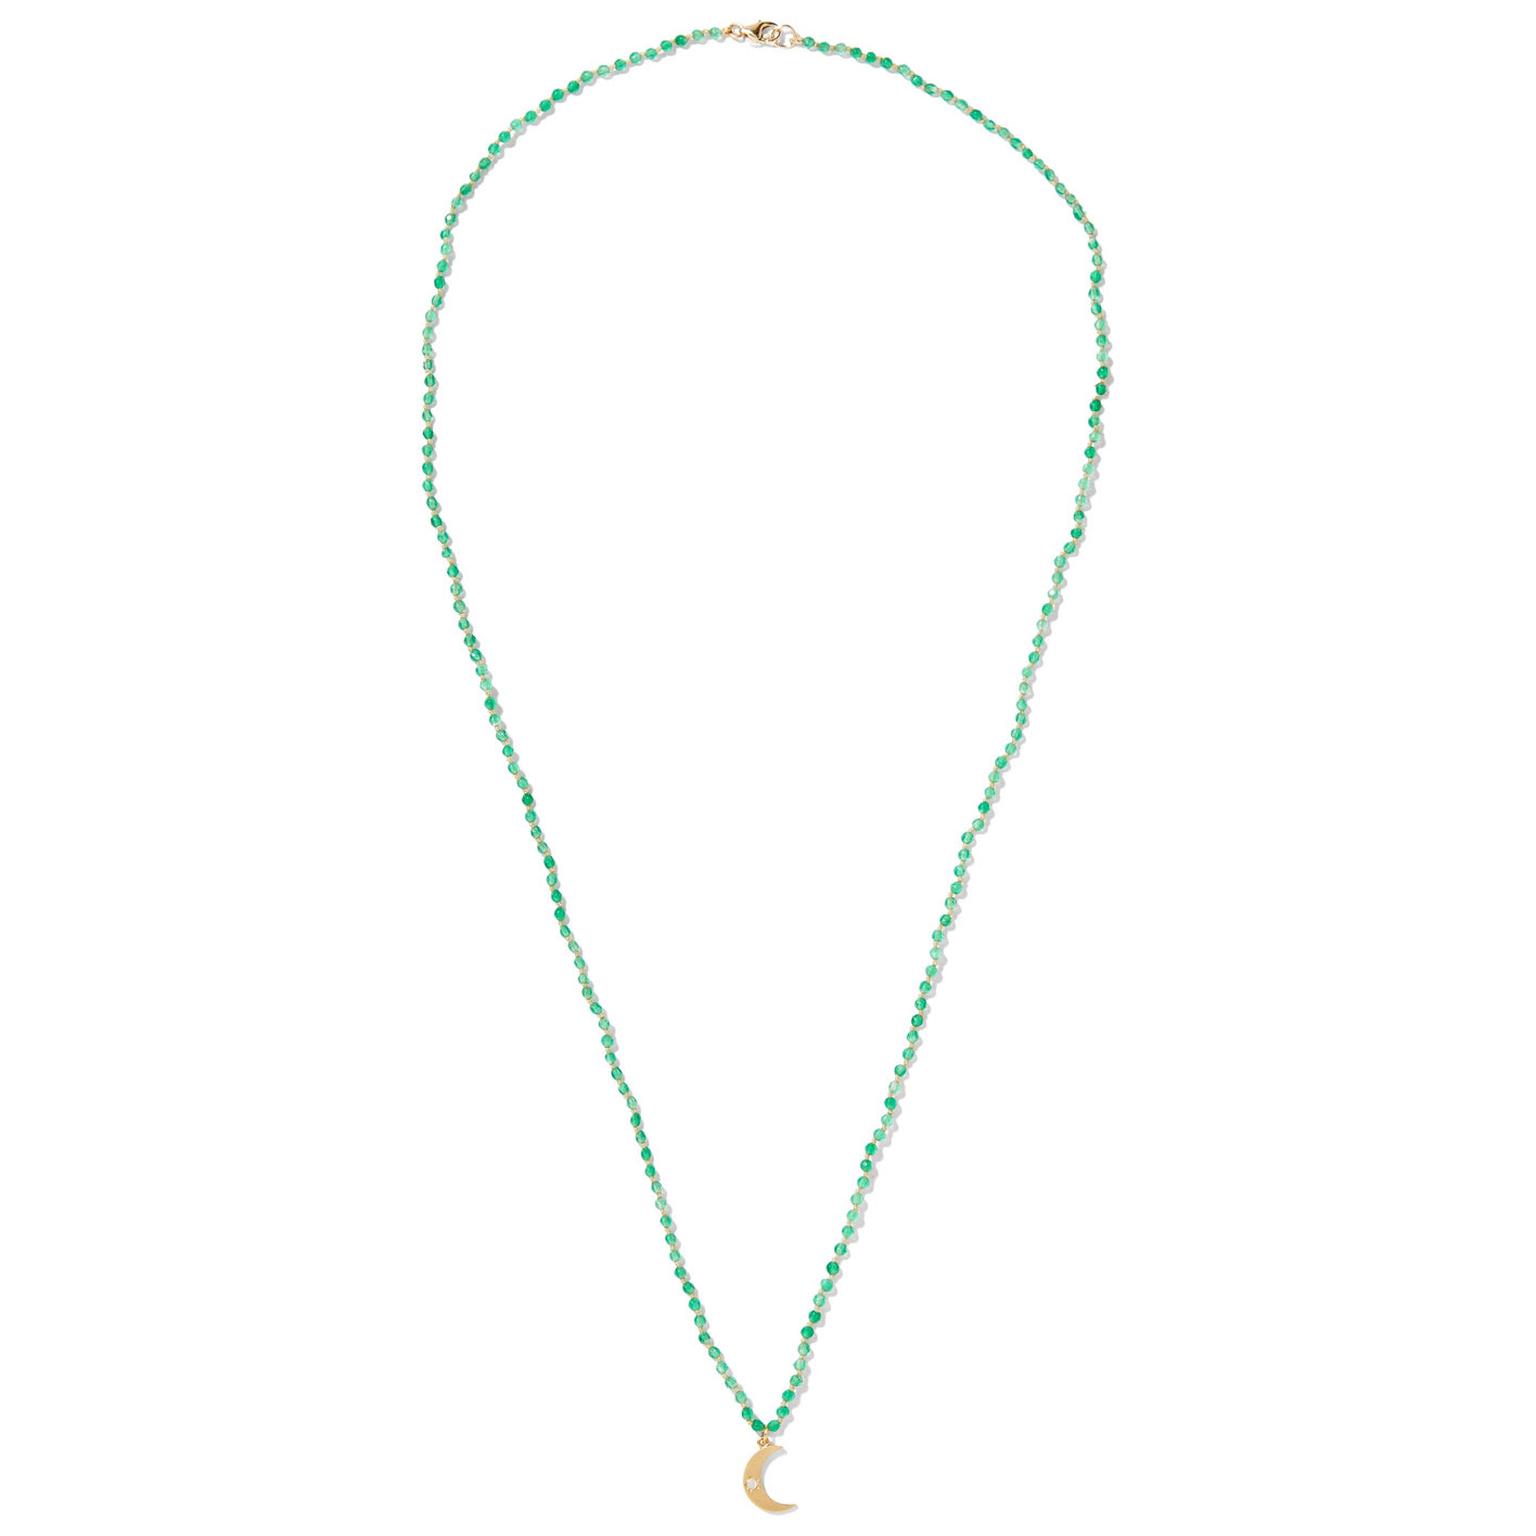 Andrea Fohrman Crescent Moon onyx and opal necklace pendant 